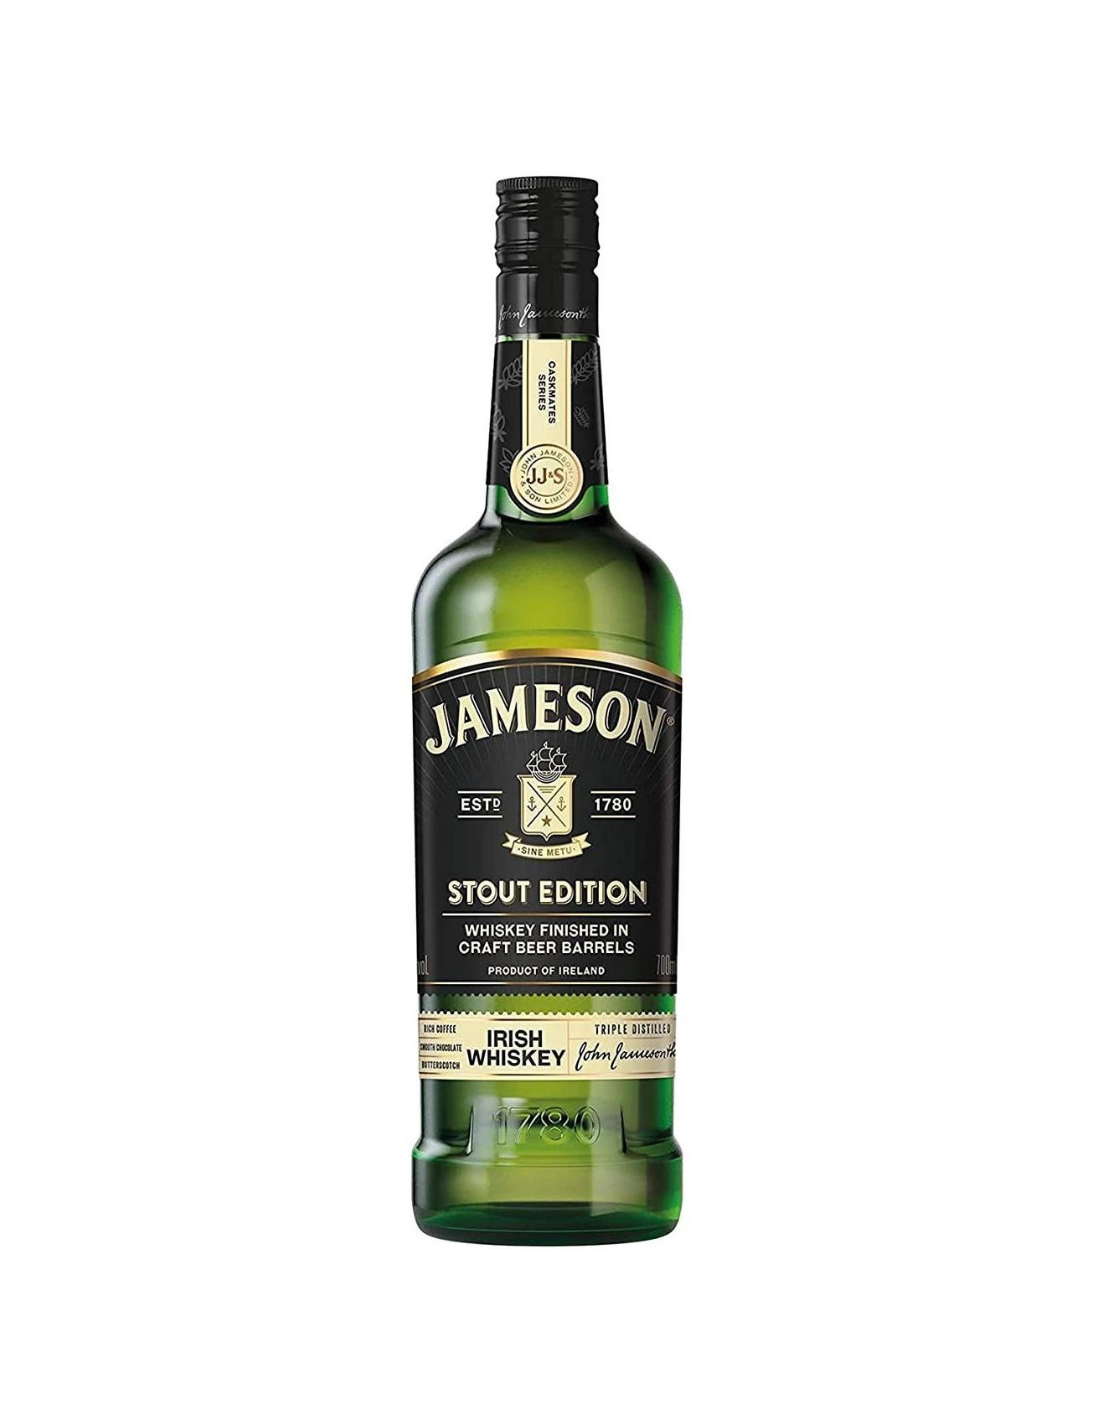 Whisky Jameson Caskmates Stout, 0.7L, 40% alc., Irlanda alcooldiscount.ro